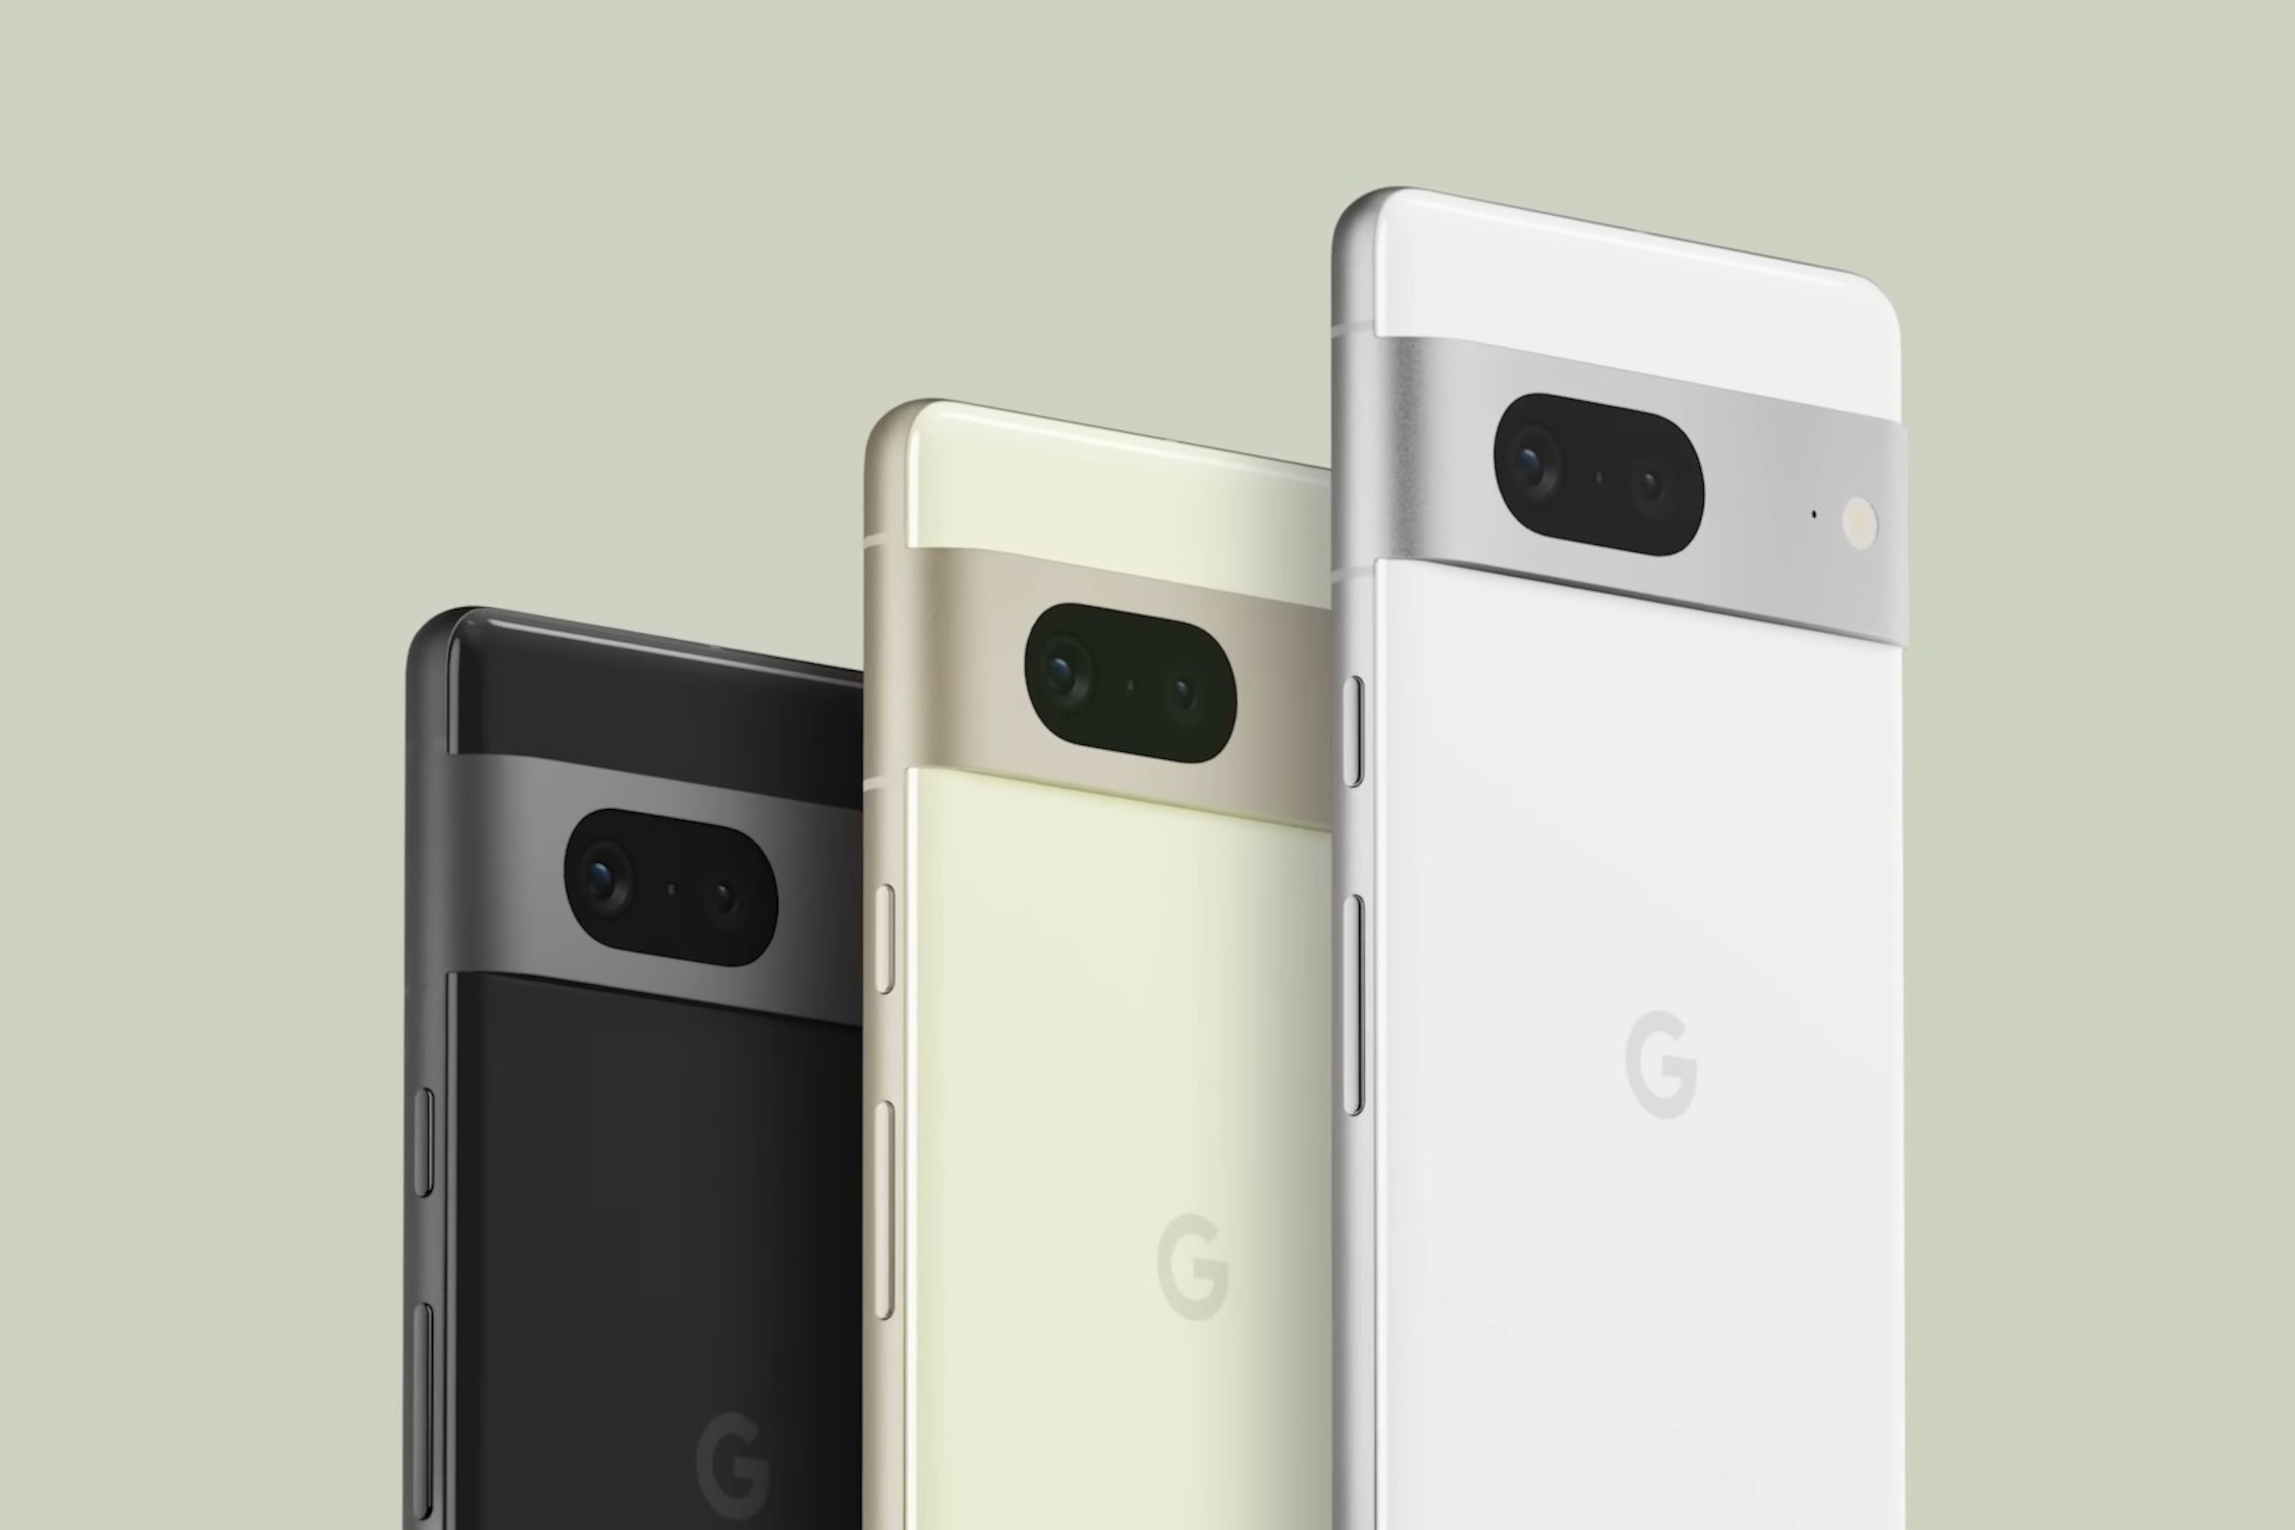 رنگ های مختلف تلفن همراه Google Pixel 7 Pro / Google Pixel 7 Pro